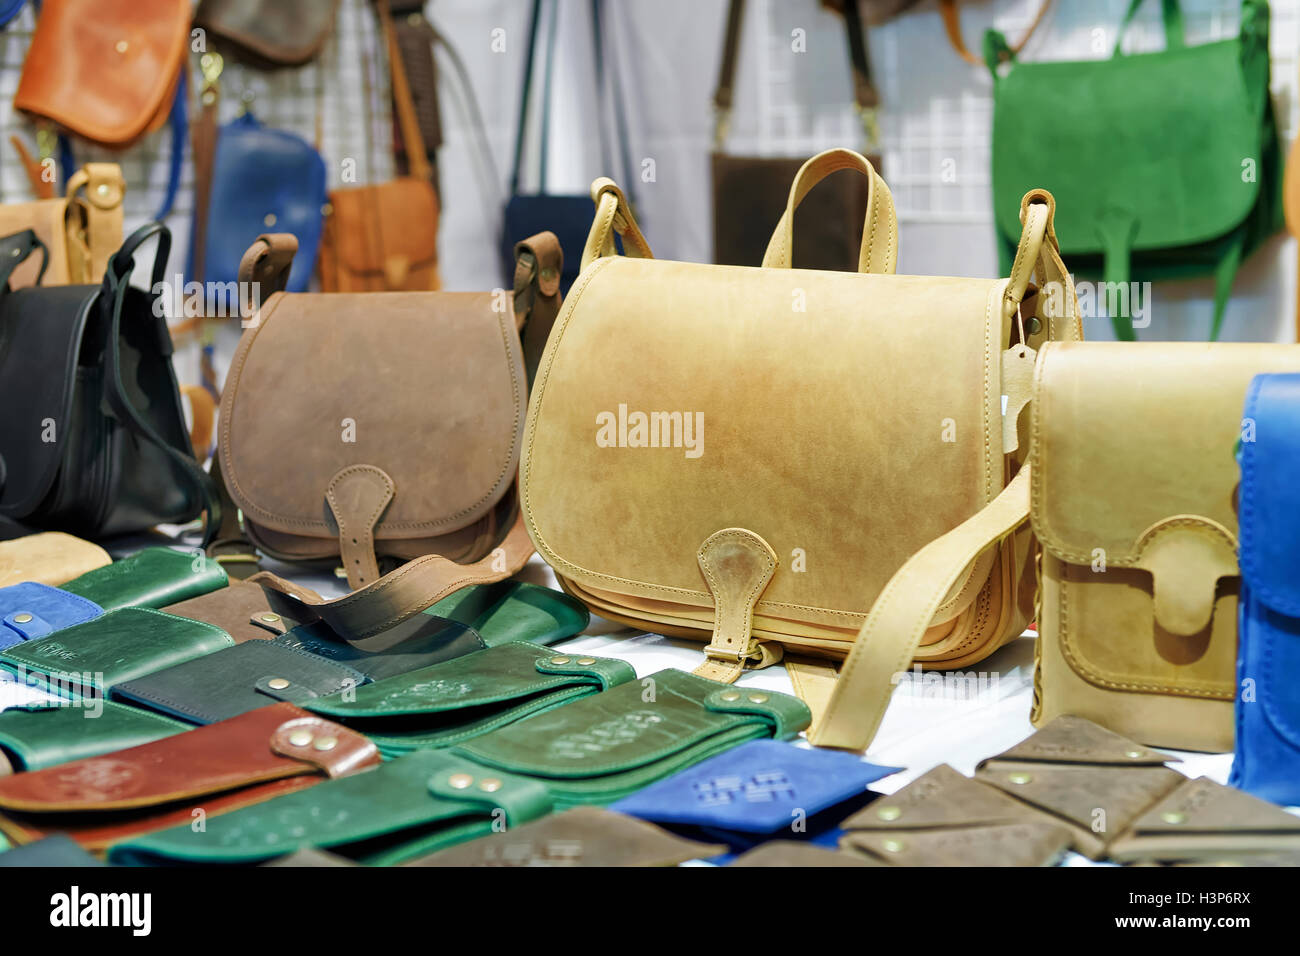 Handmade Leather Bag - Etsy